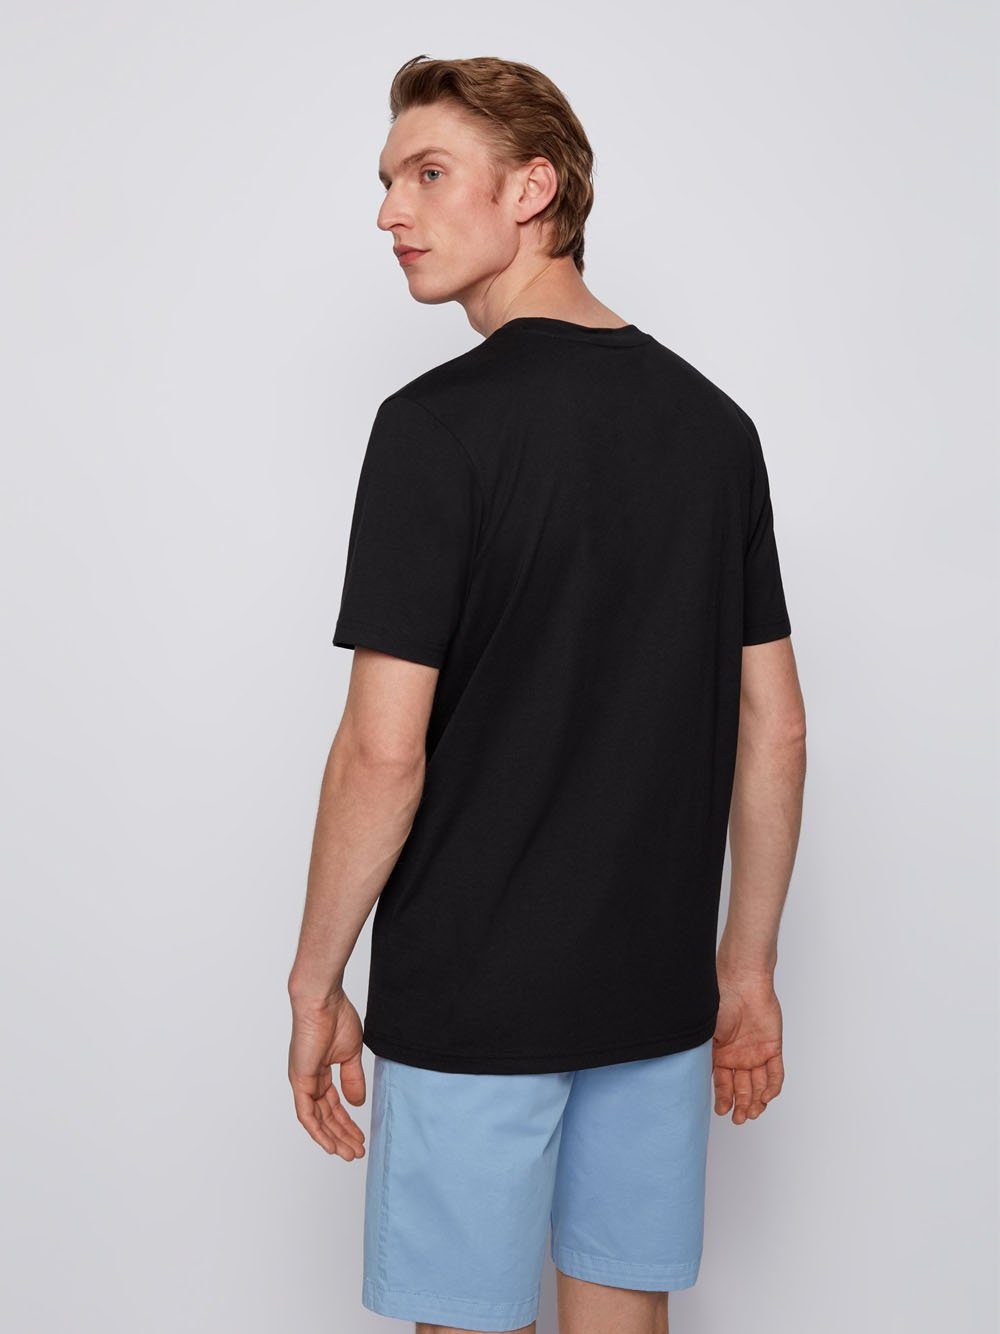 BOSS Glow in the dark panther T-shirt Black - MAISONDEFASHION.COM